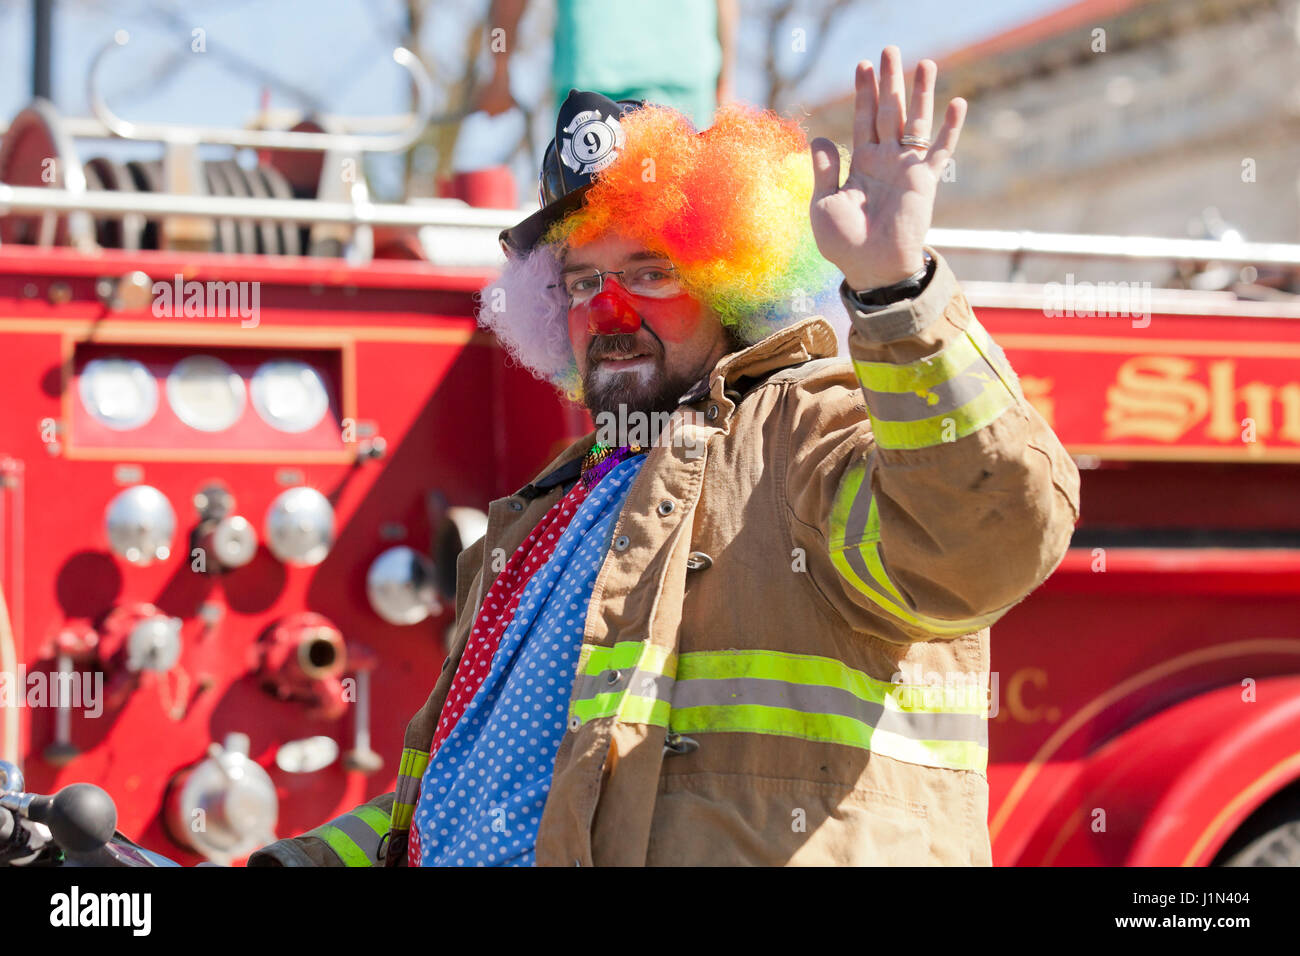 Clowns on firetruck during a street parade - USA Stock Photo